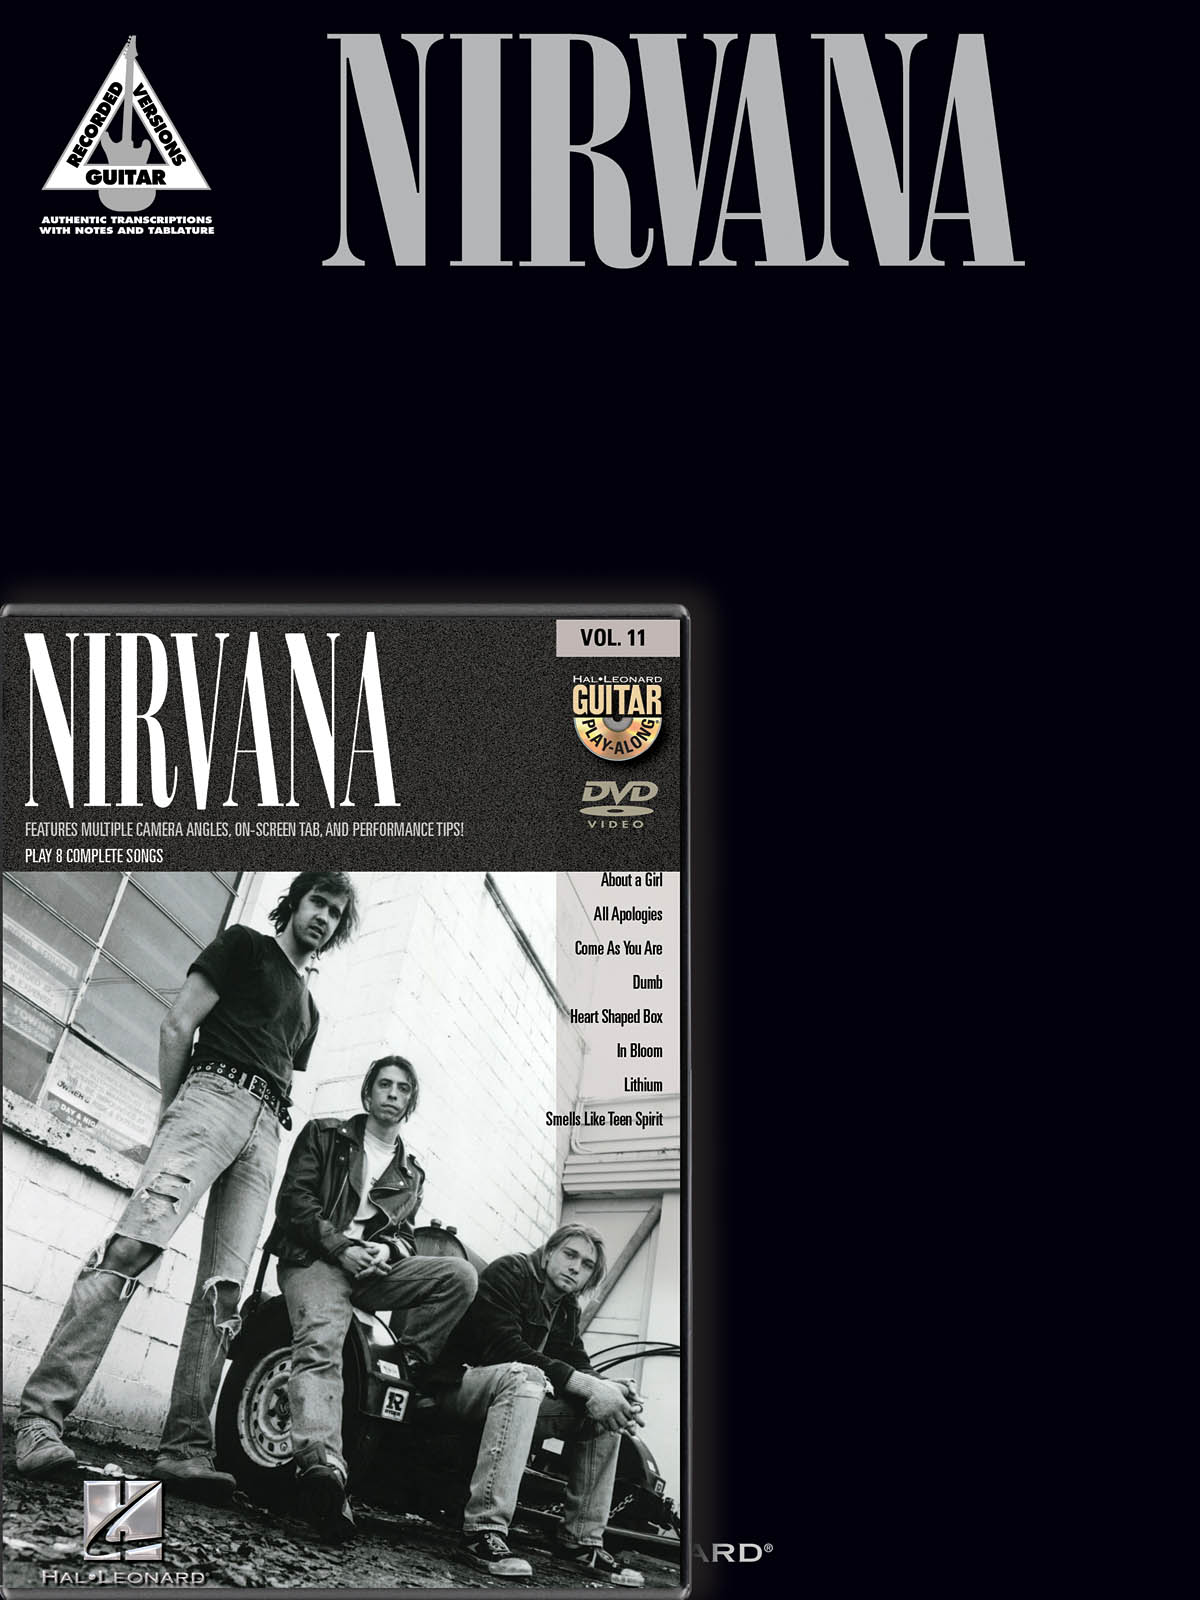 Nirvana Guitar Pack - Includes Nirvana Guitar Tab Book and Nirvana Guitar Play-Along DVD